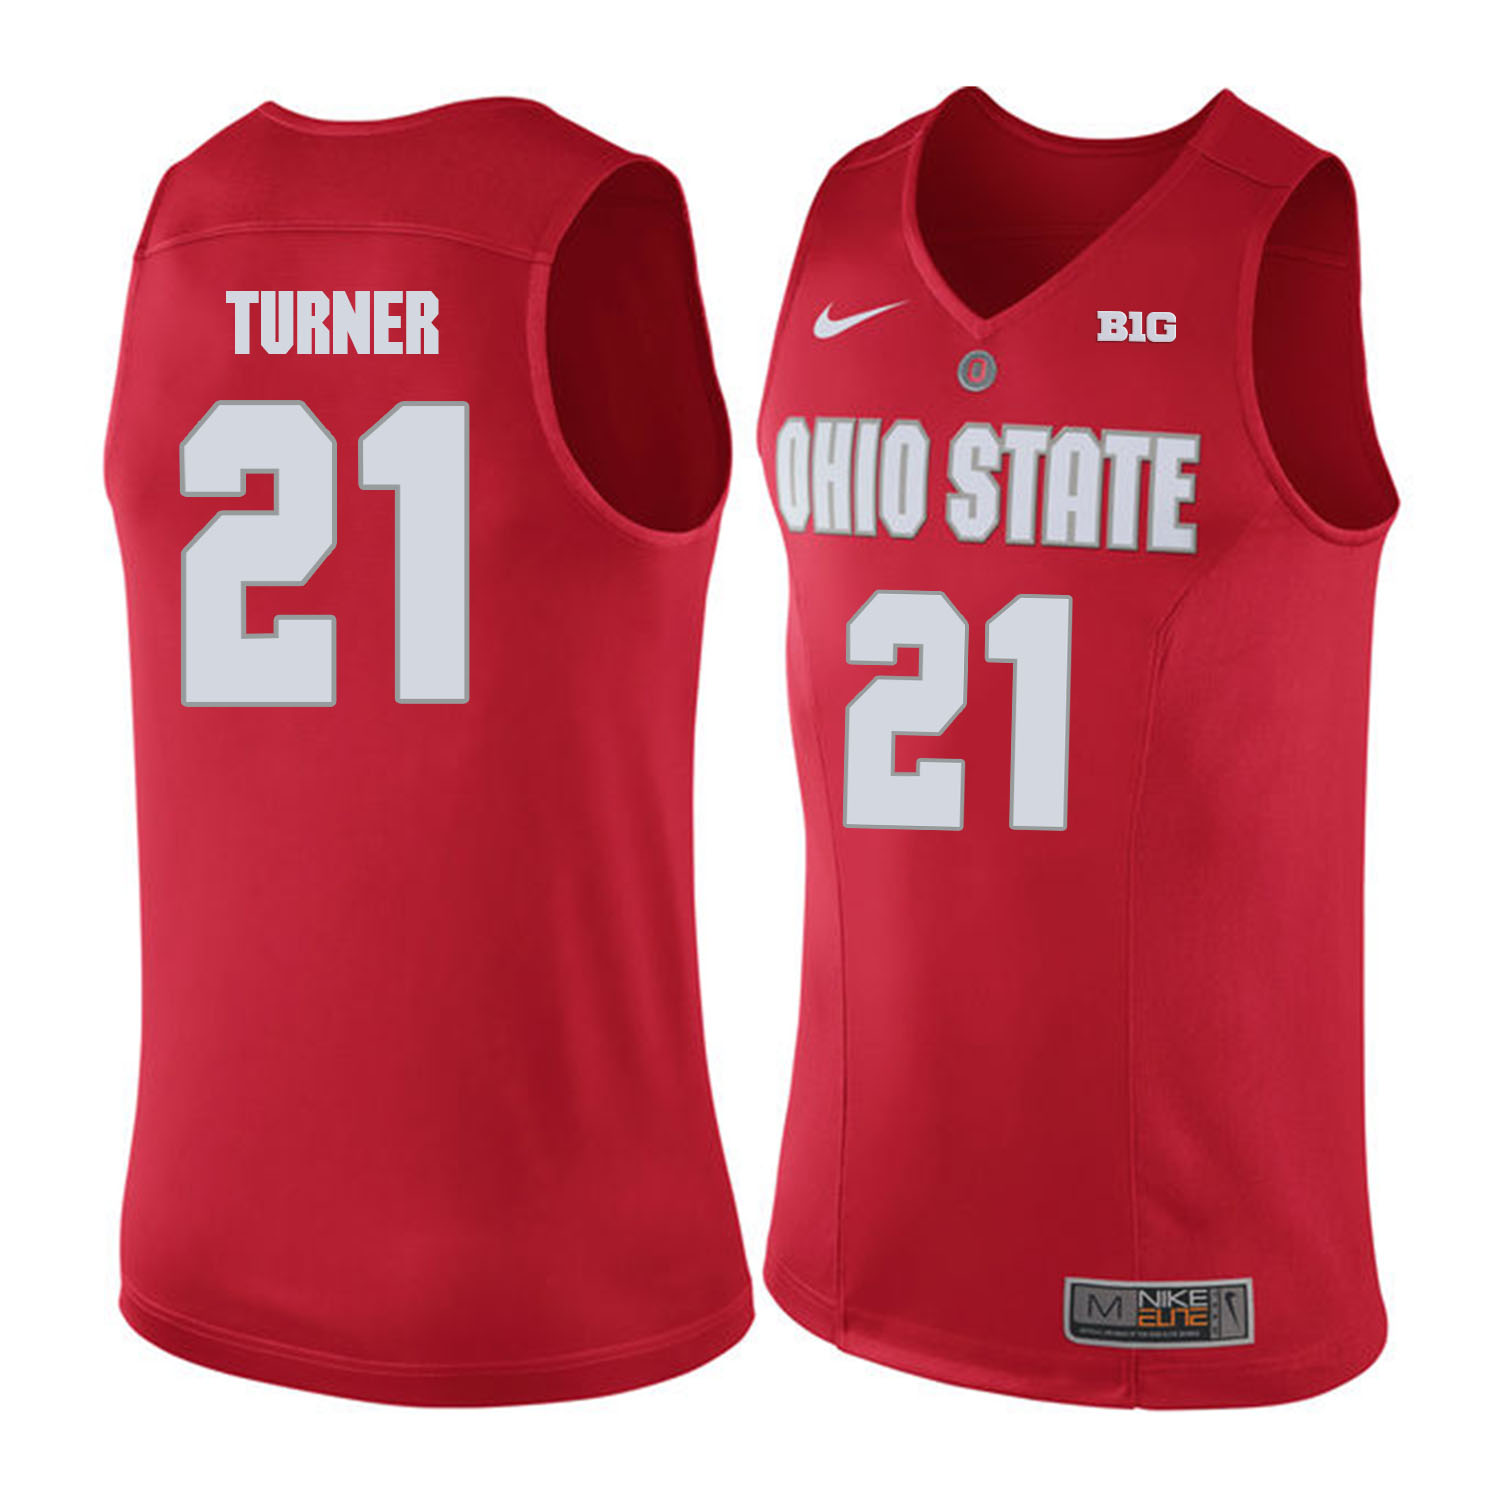 Ohio State Buckeyes 21 Evan Turner Red College Basketball Jersey